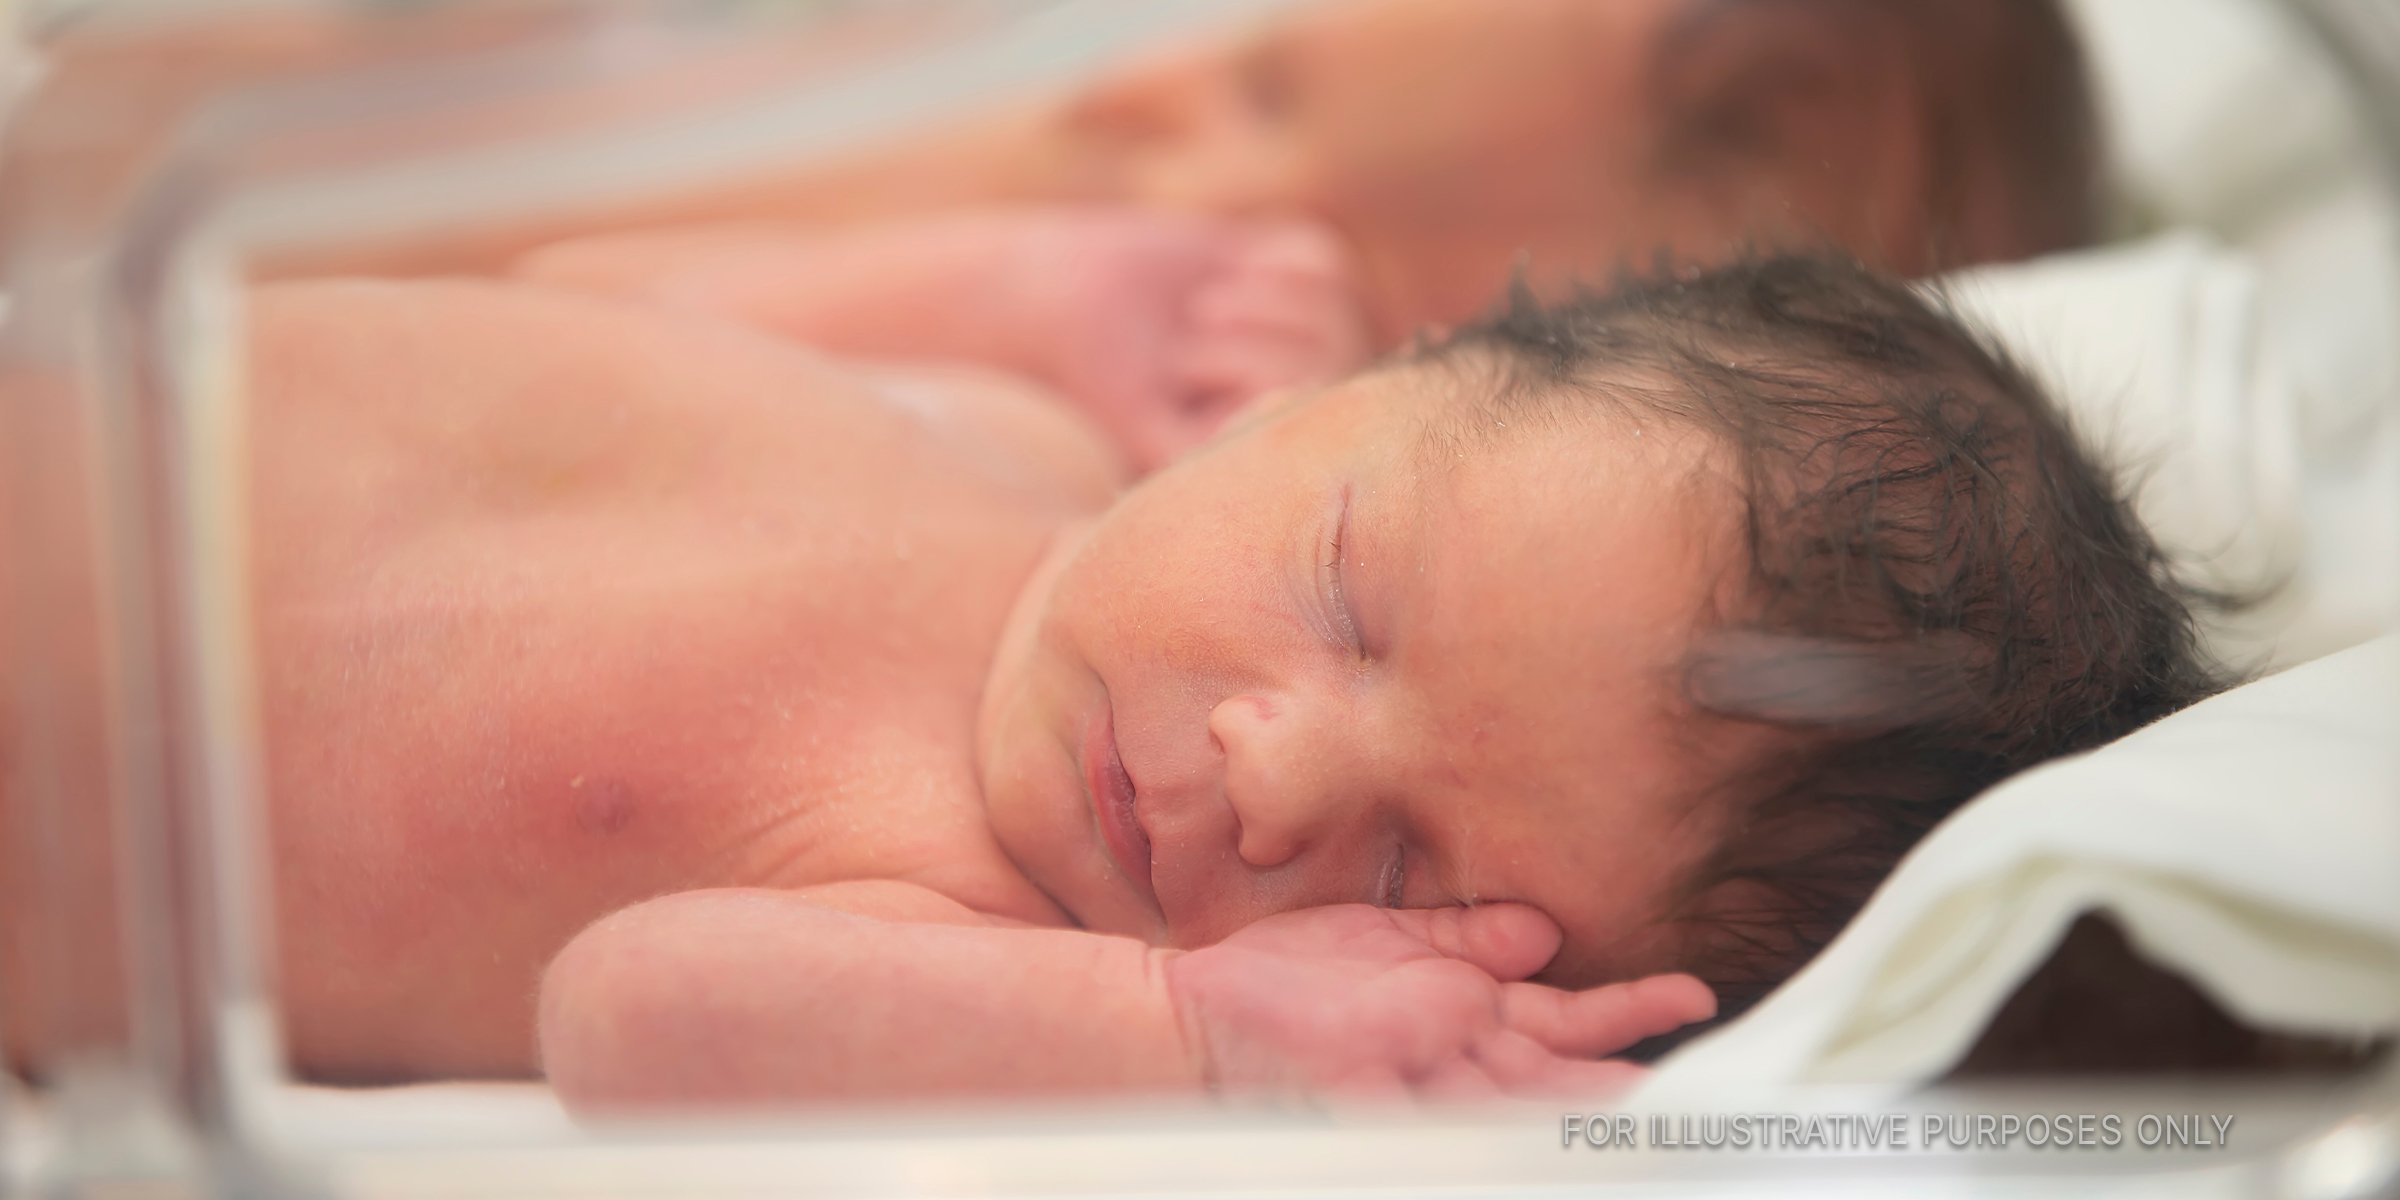 Two newborn babies. | Source: Shutterstock